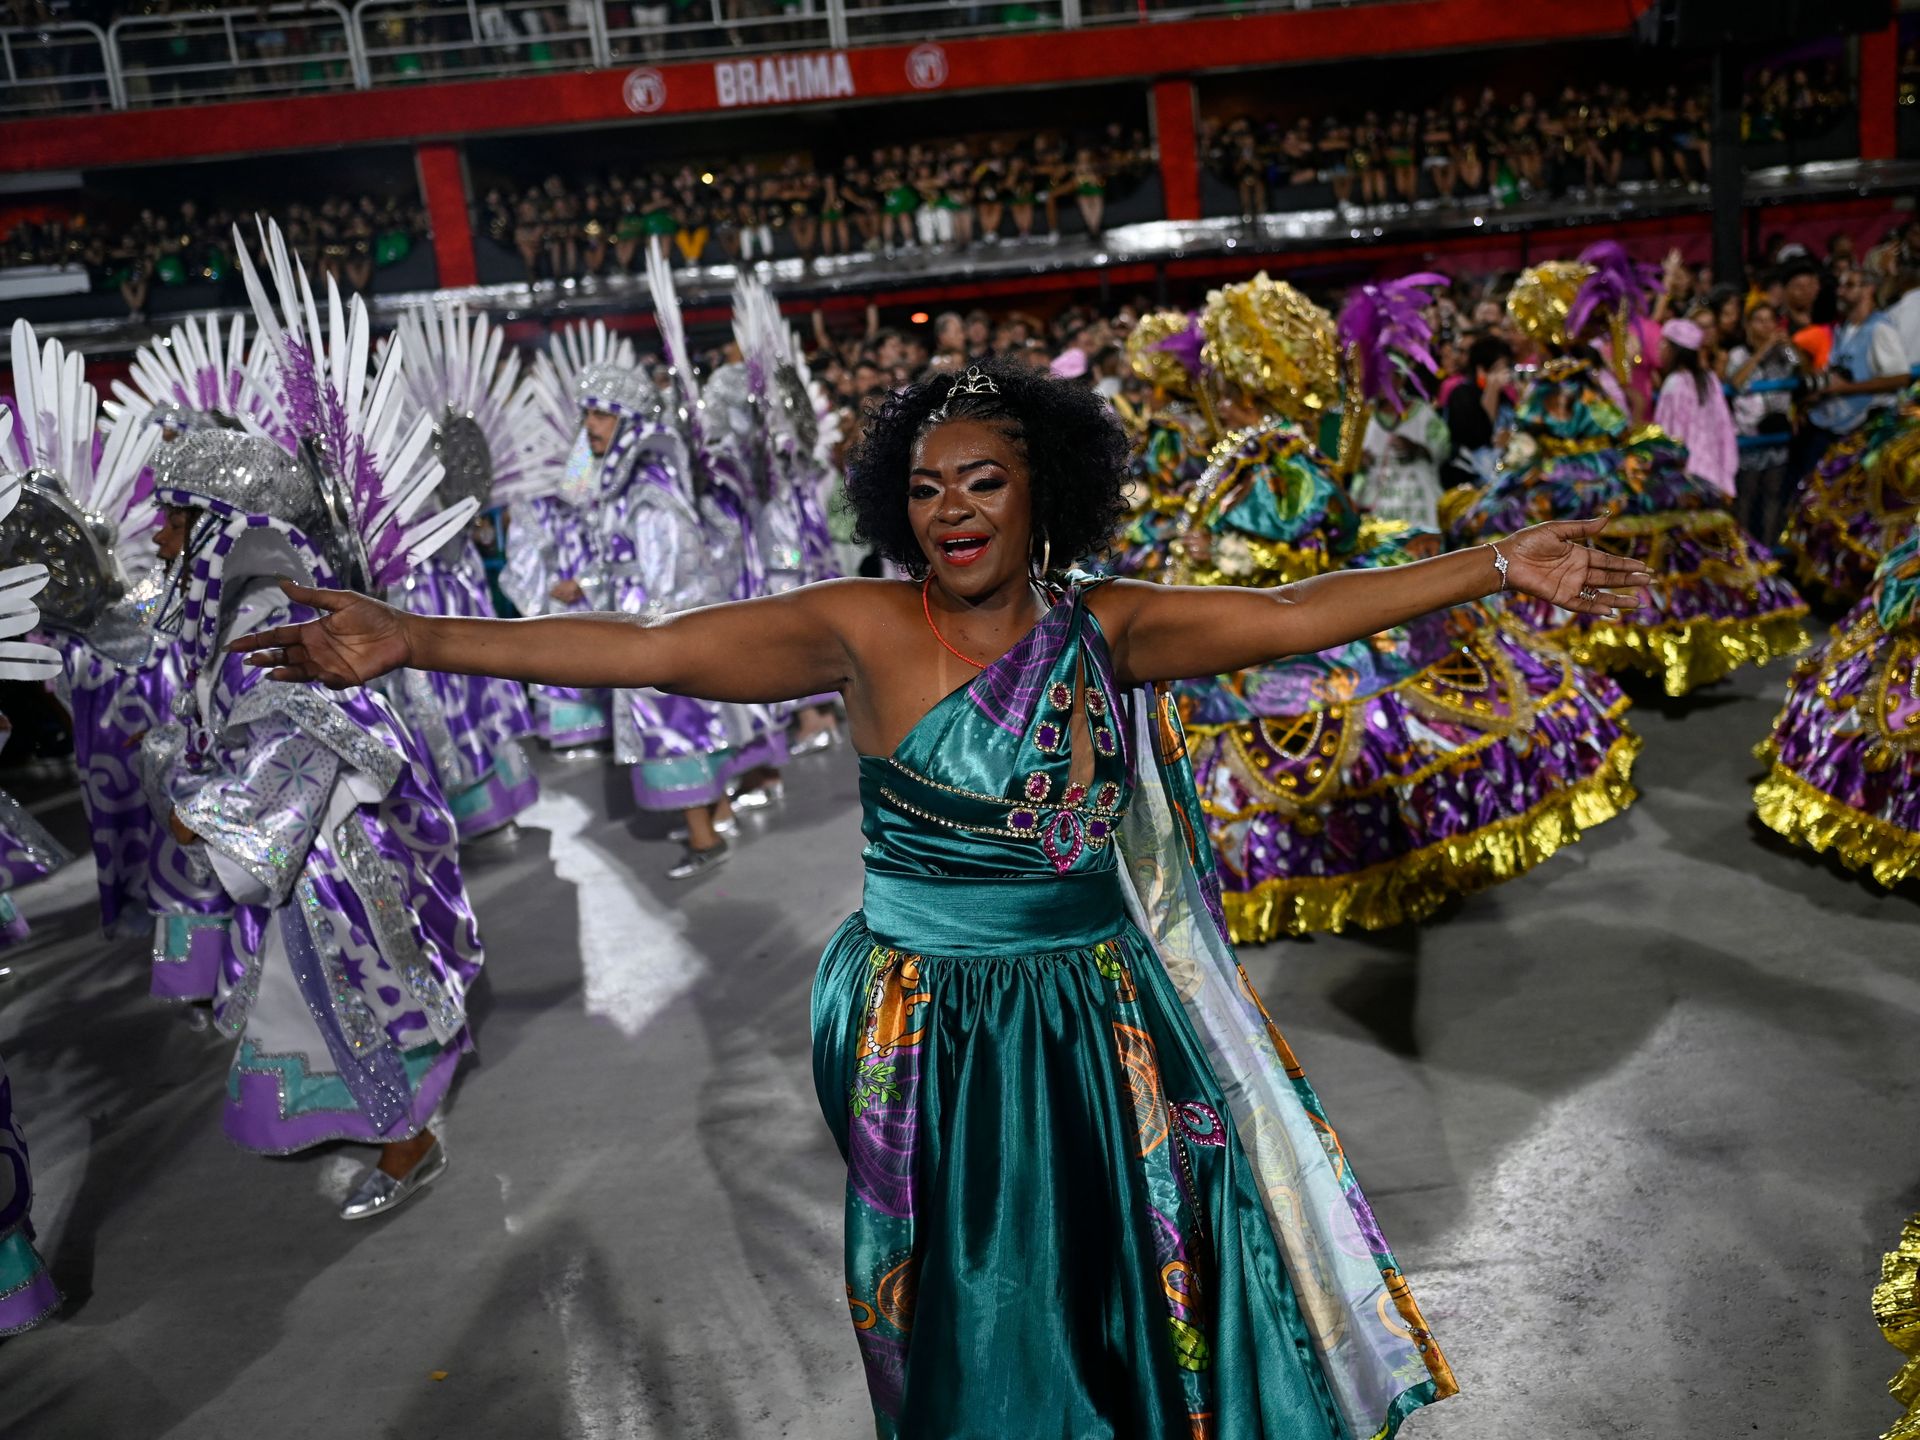 Brazil Carnival Queen Porn - In photos: Brazil's Carnival is back in full force